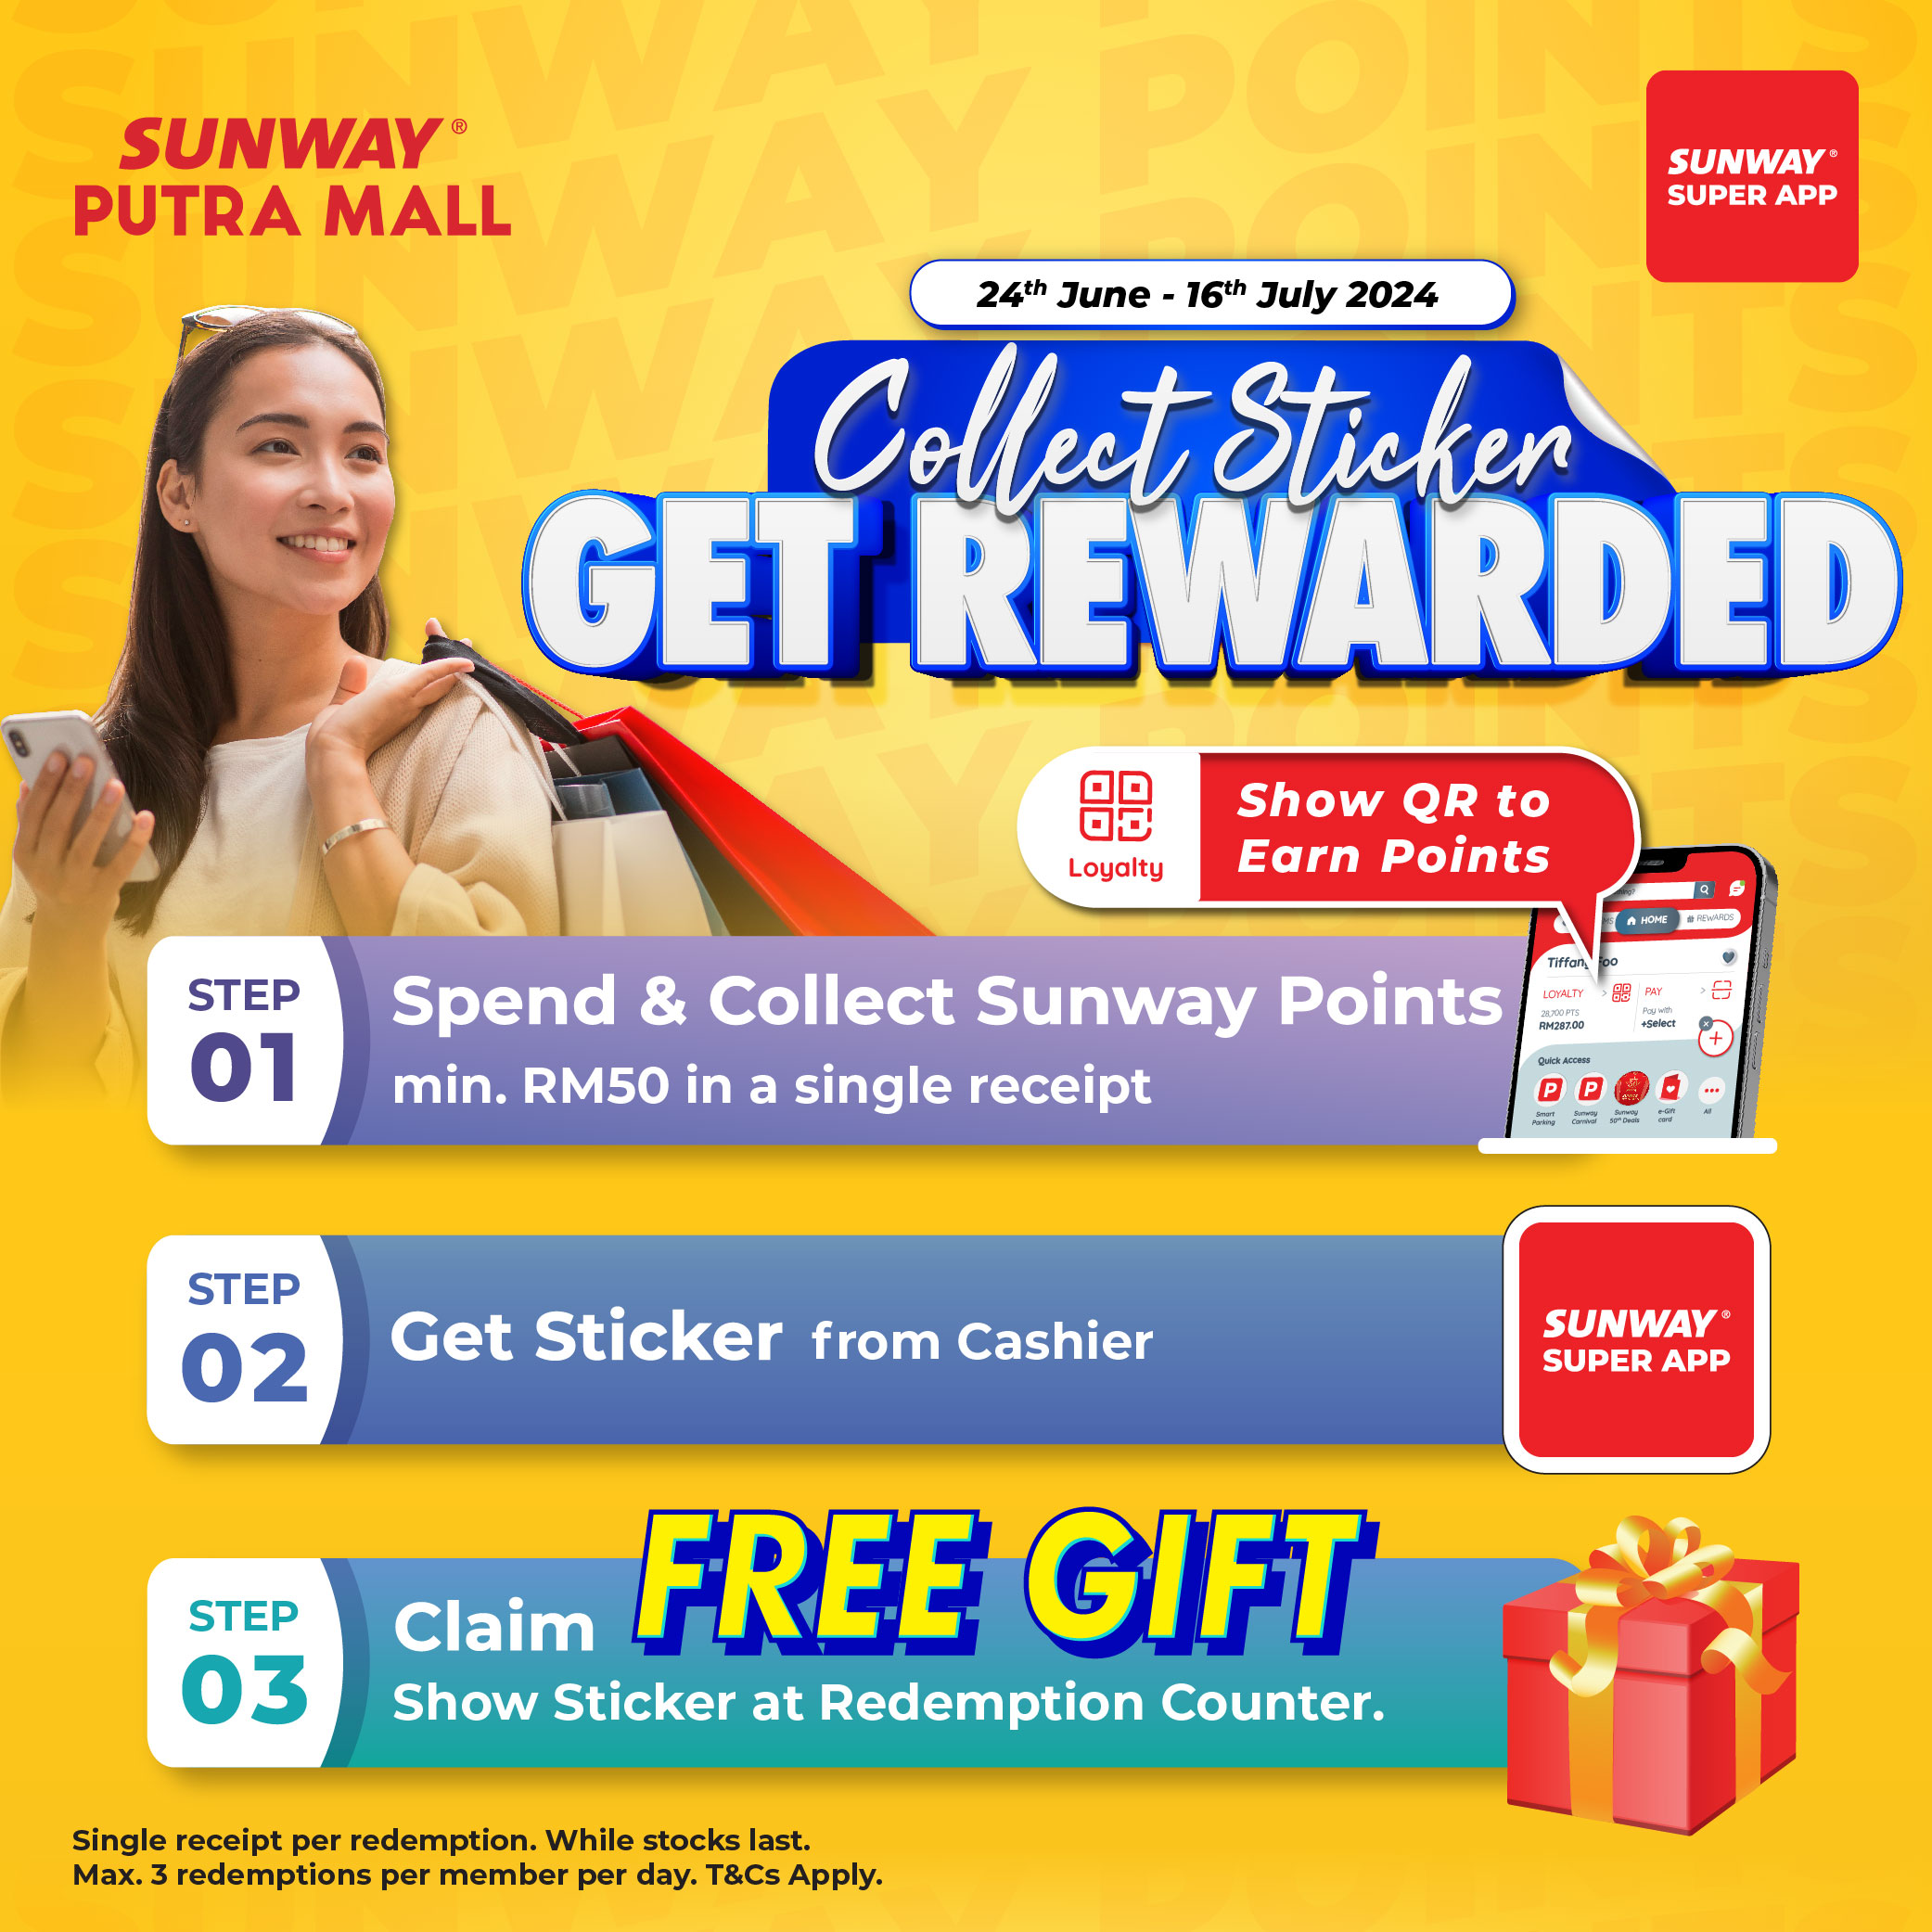 Collect Sticker Get Rewarded in Sunway Putra Mall